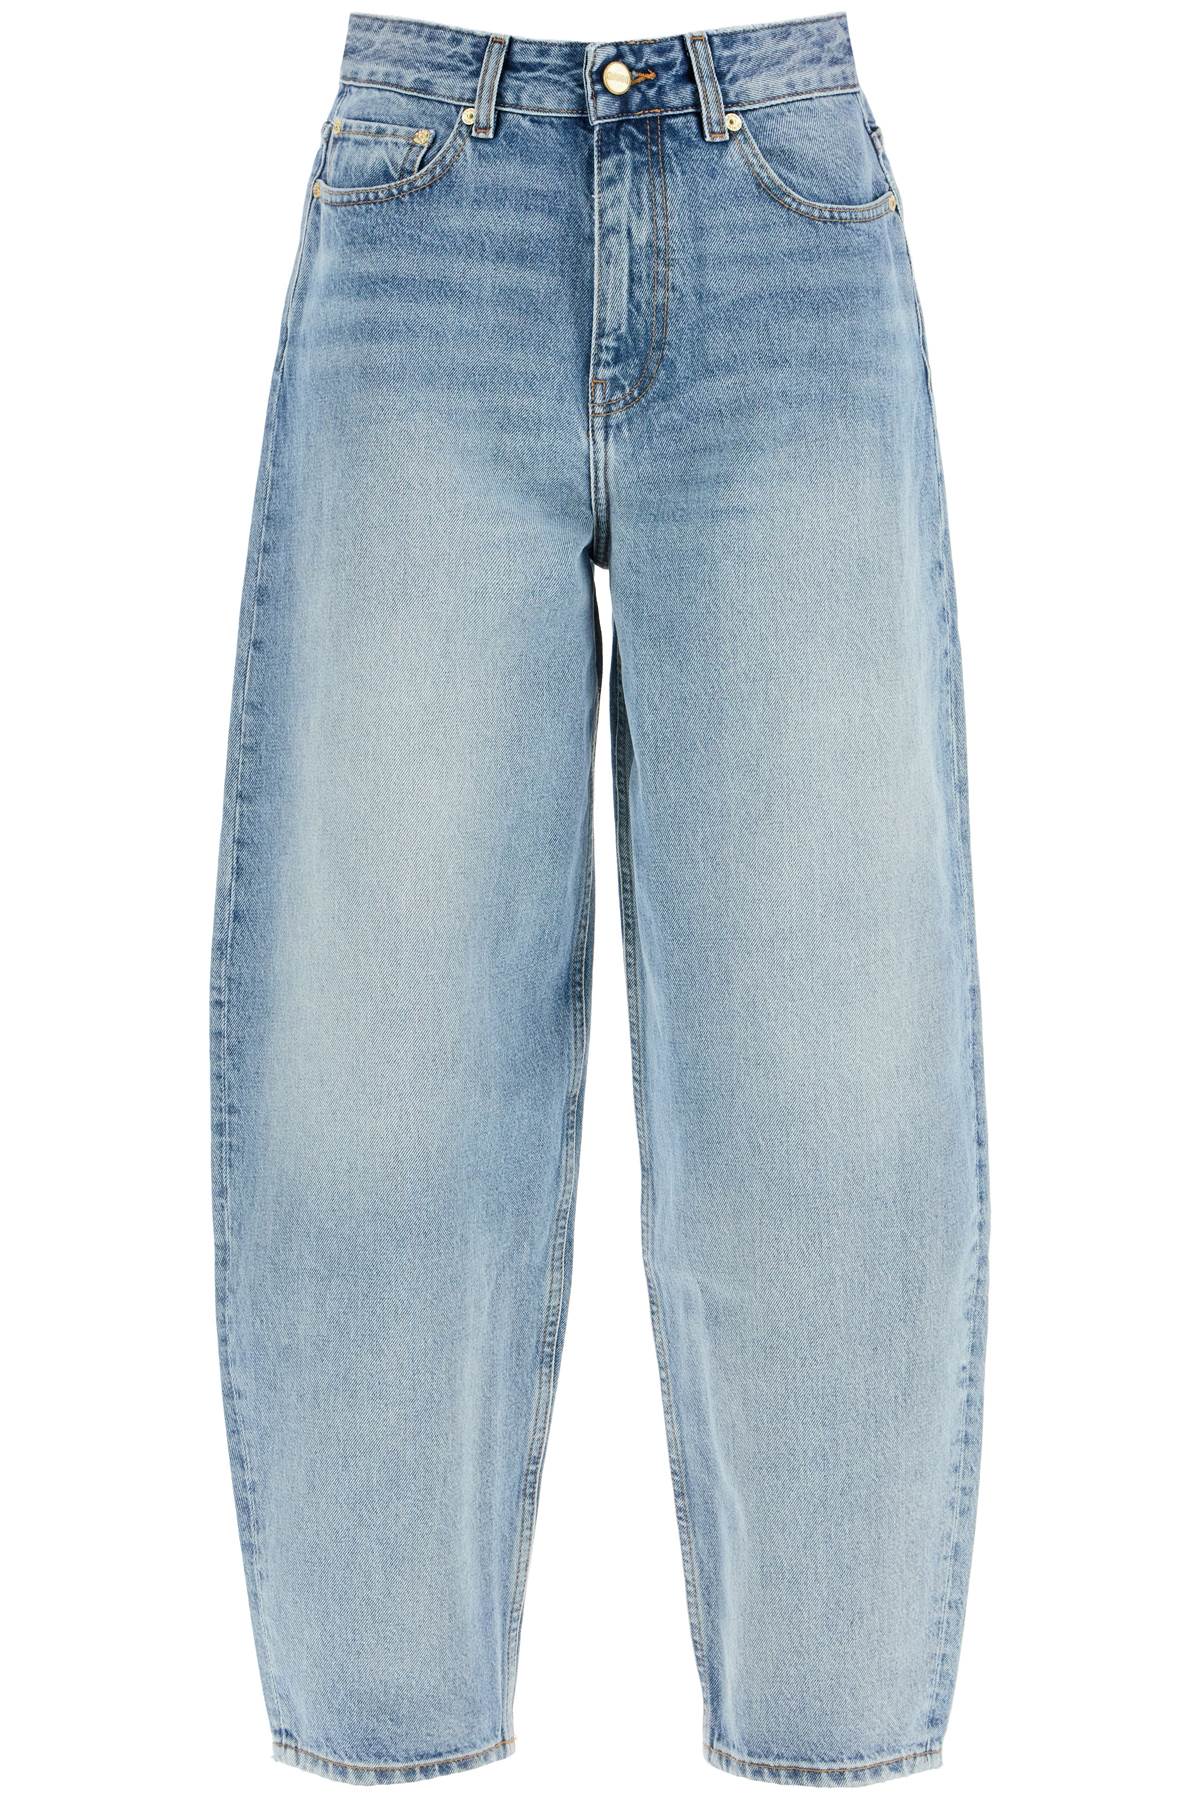 organic denim tapered jeans in eight J1641 LIGHT BLUE VINTAGE